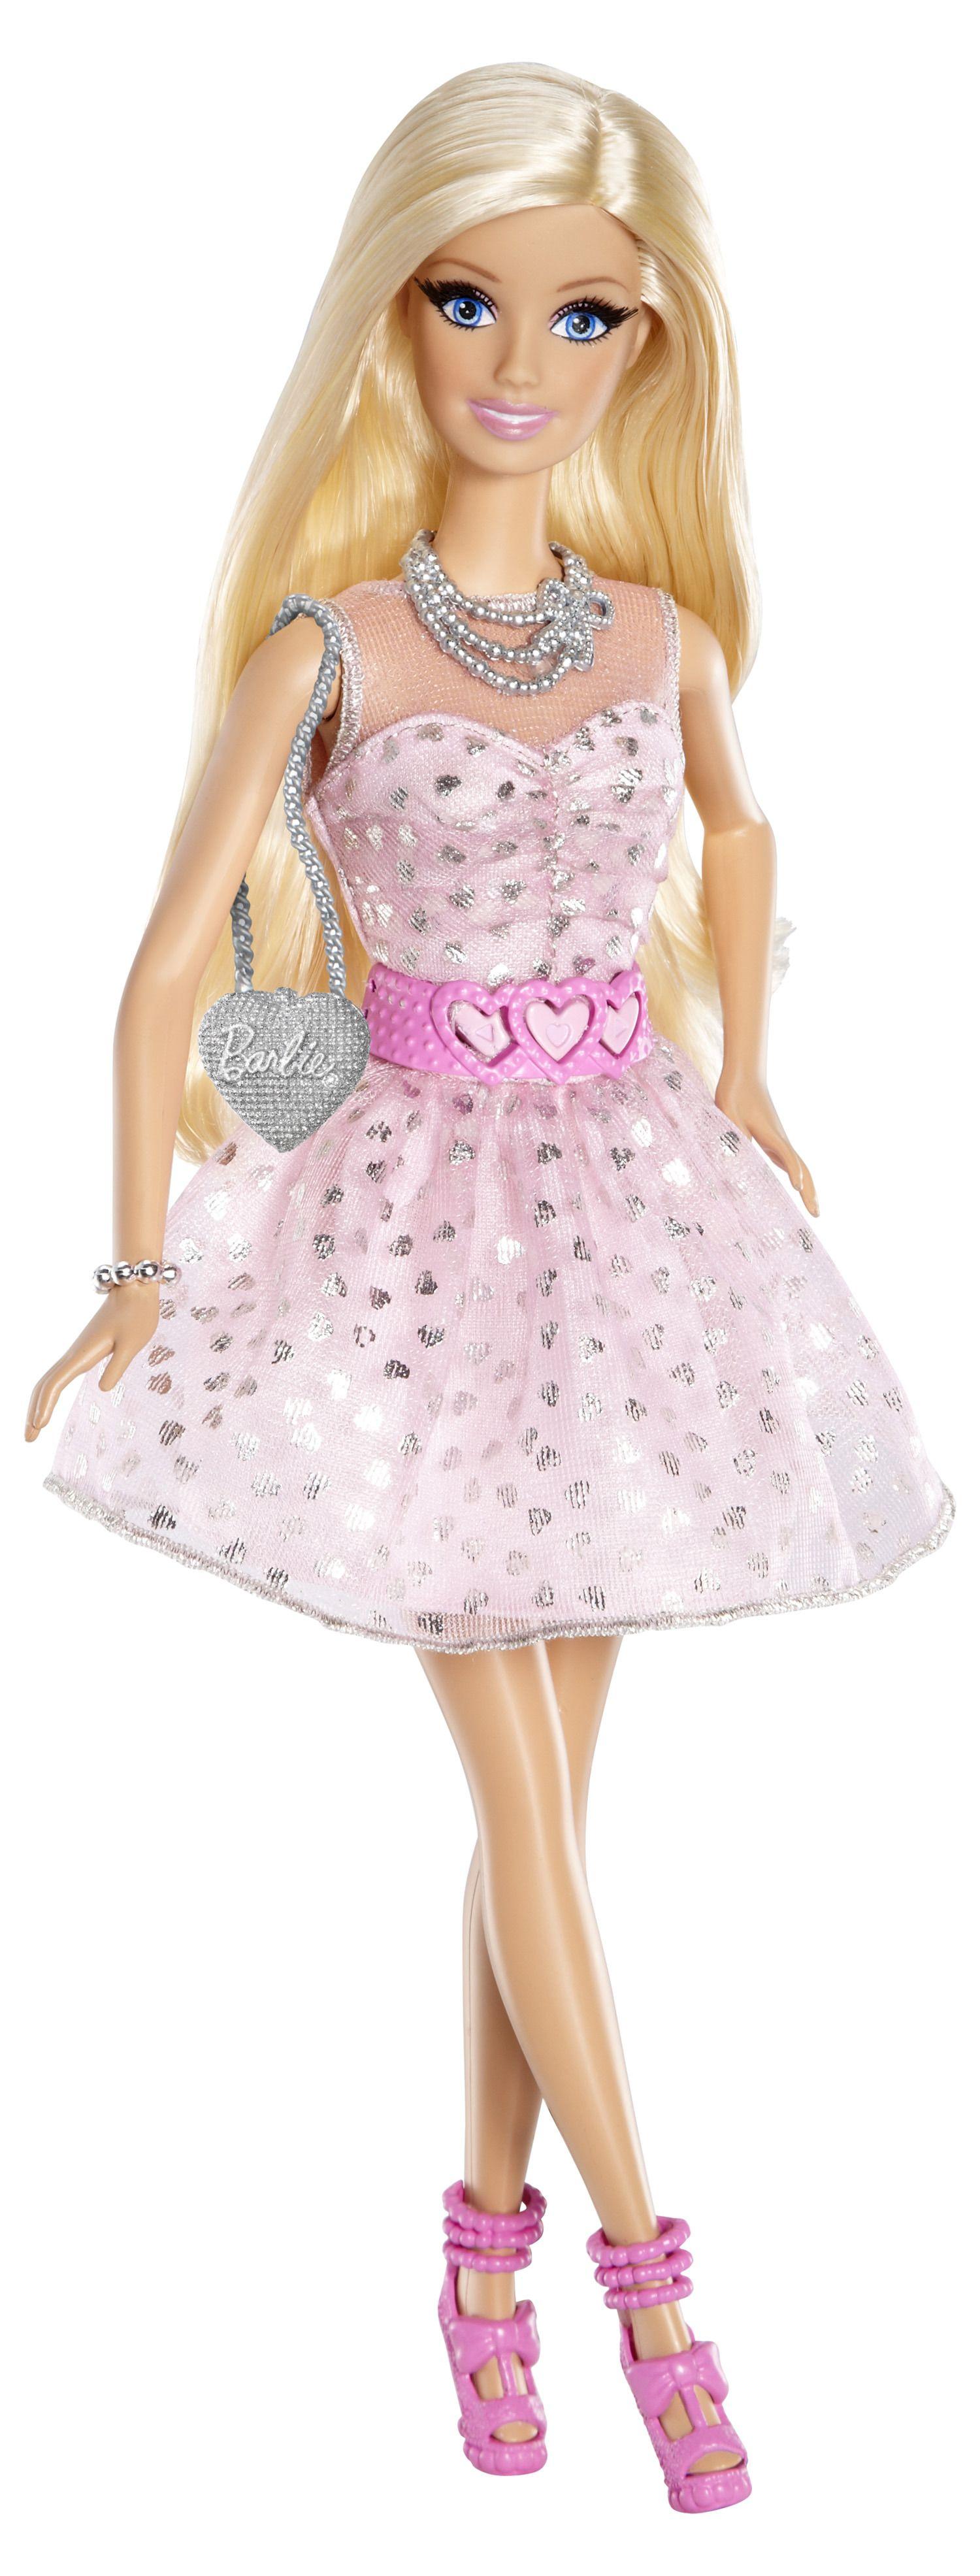 Barbie Doll Face Wallpaper Cake Princess House Image Body Girl PIcs